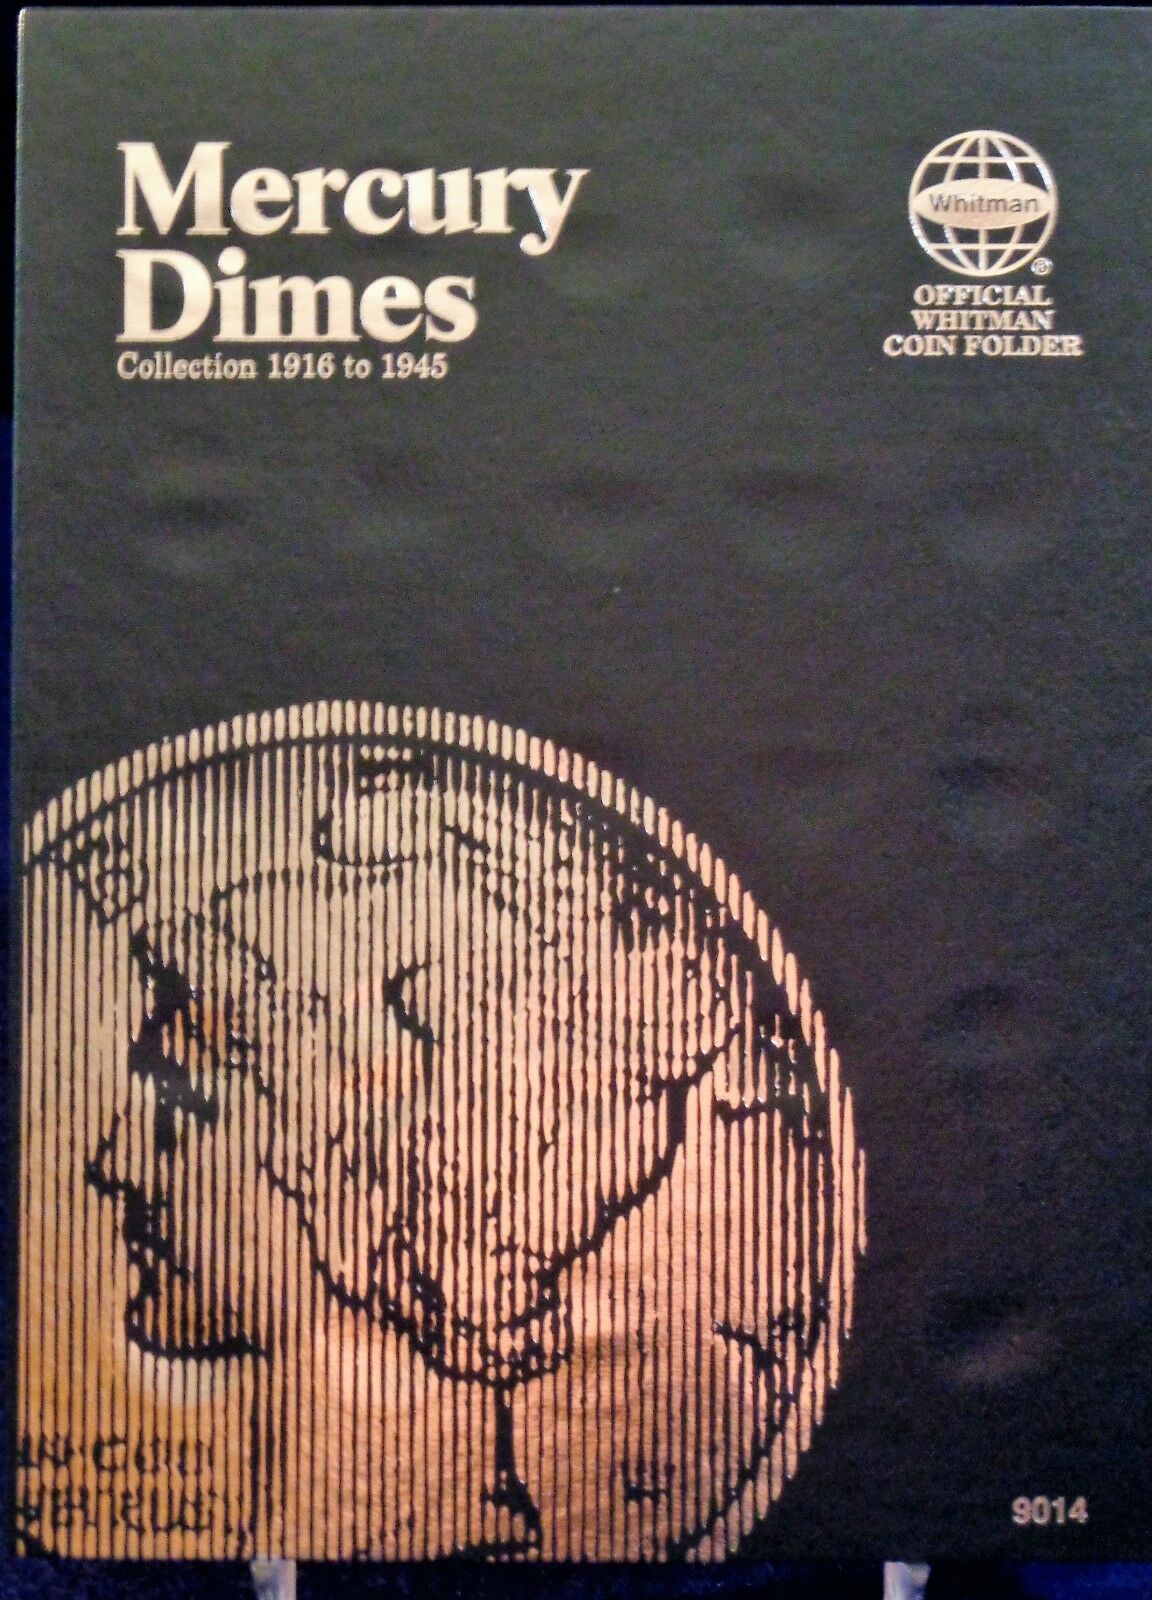 Whitman Mercury Dime 1916-1945 Coin Folder,  Album Book #9014